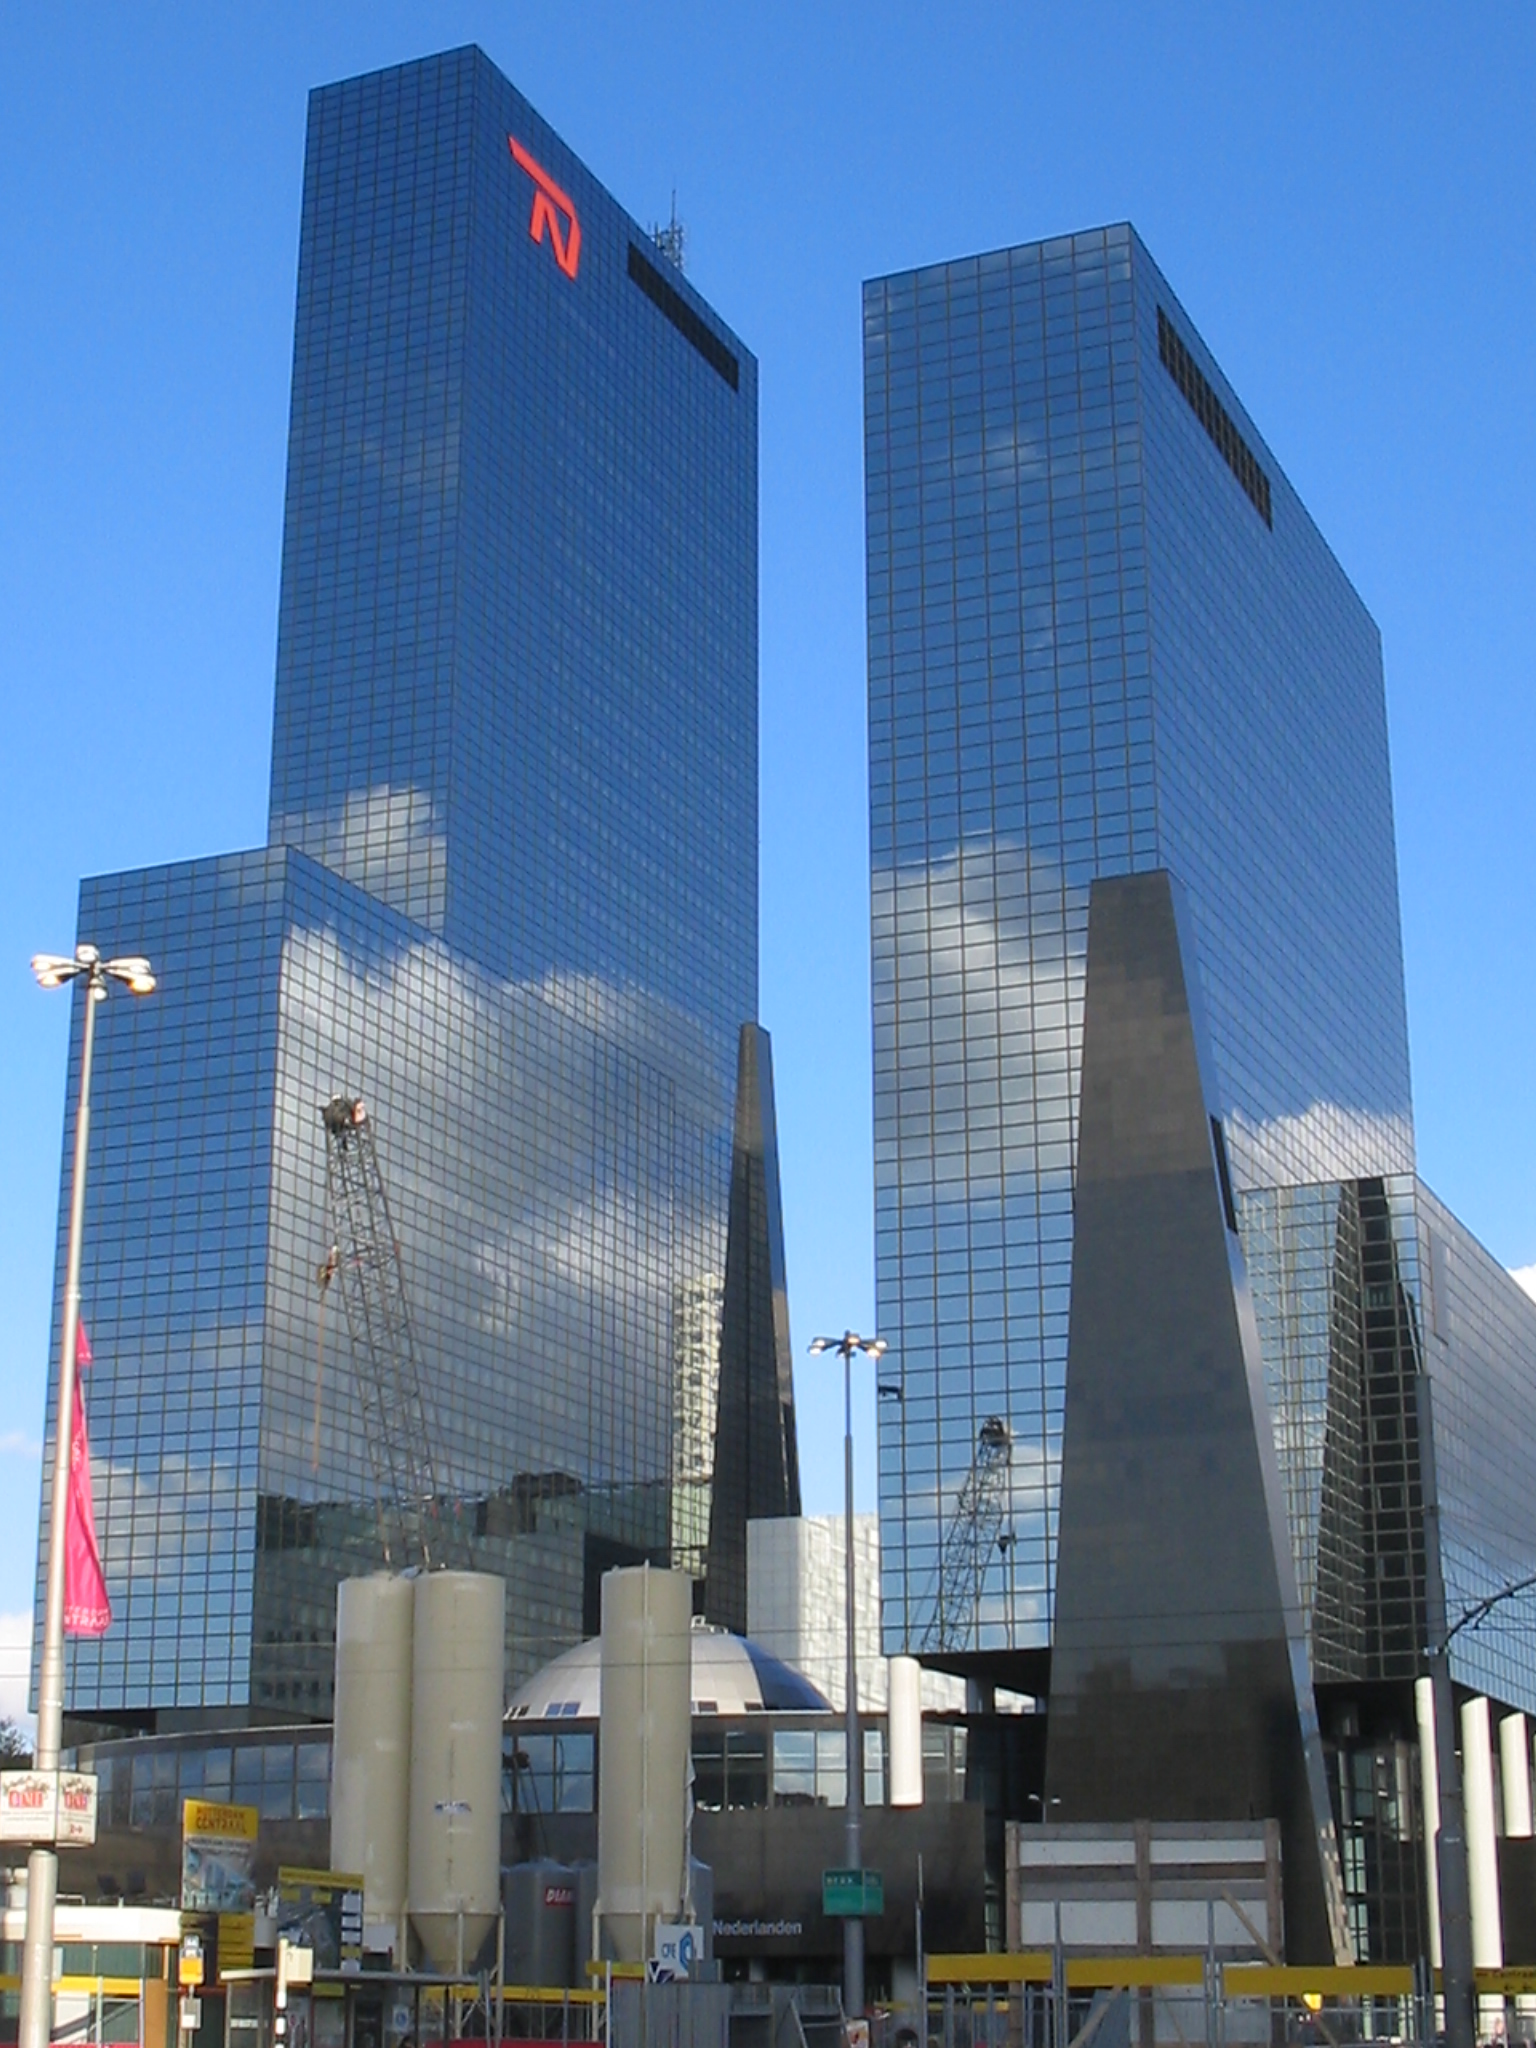 Rotterdam graphics